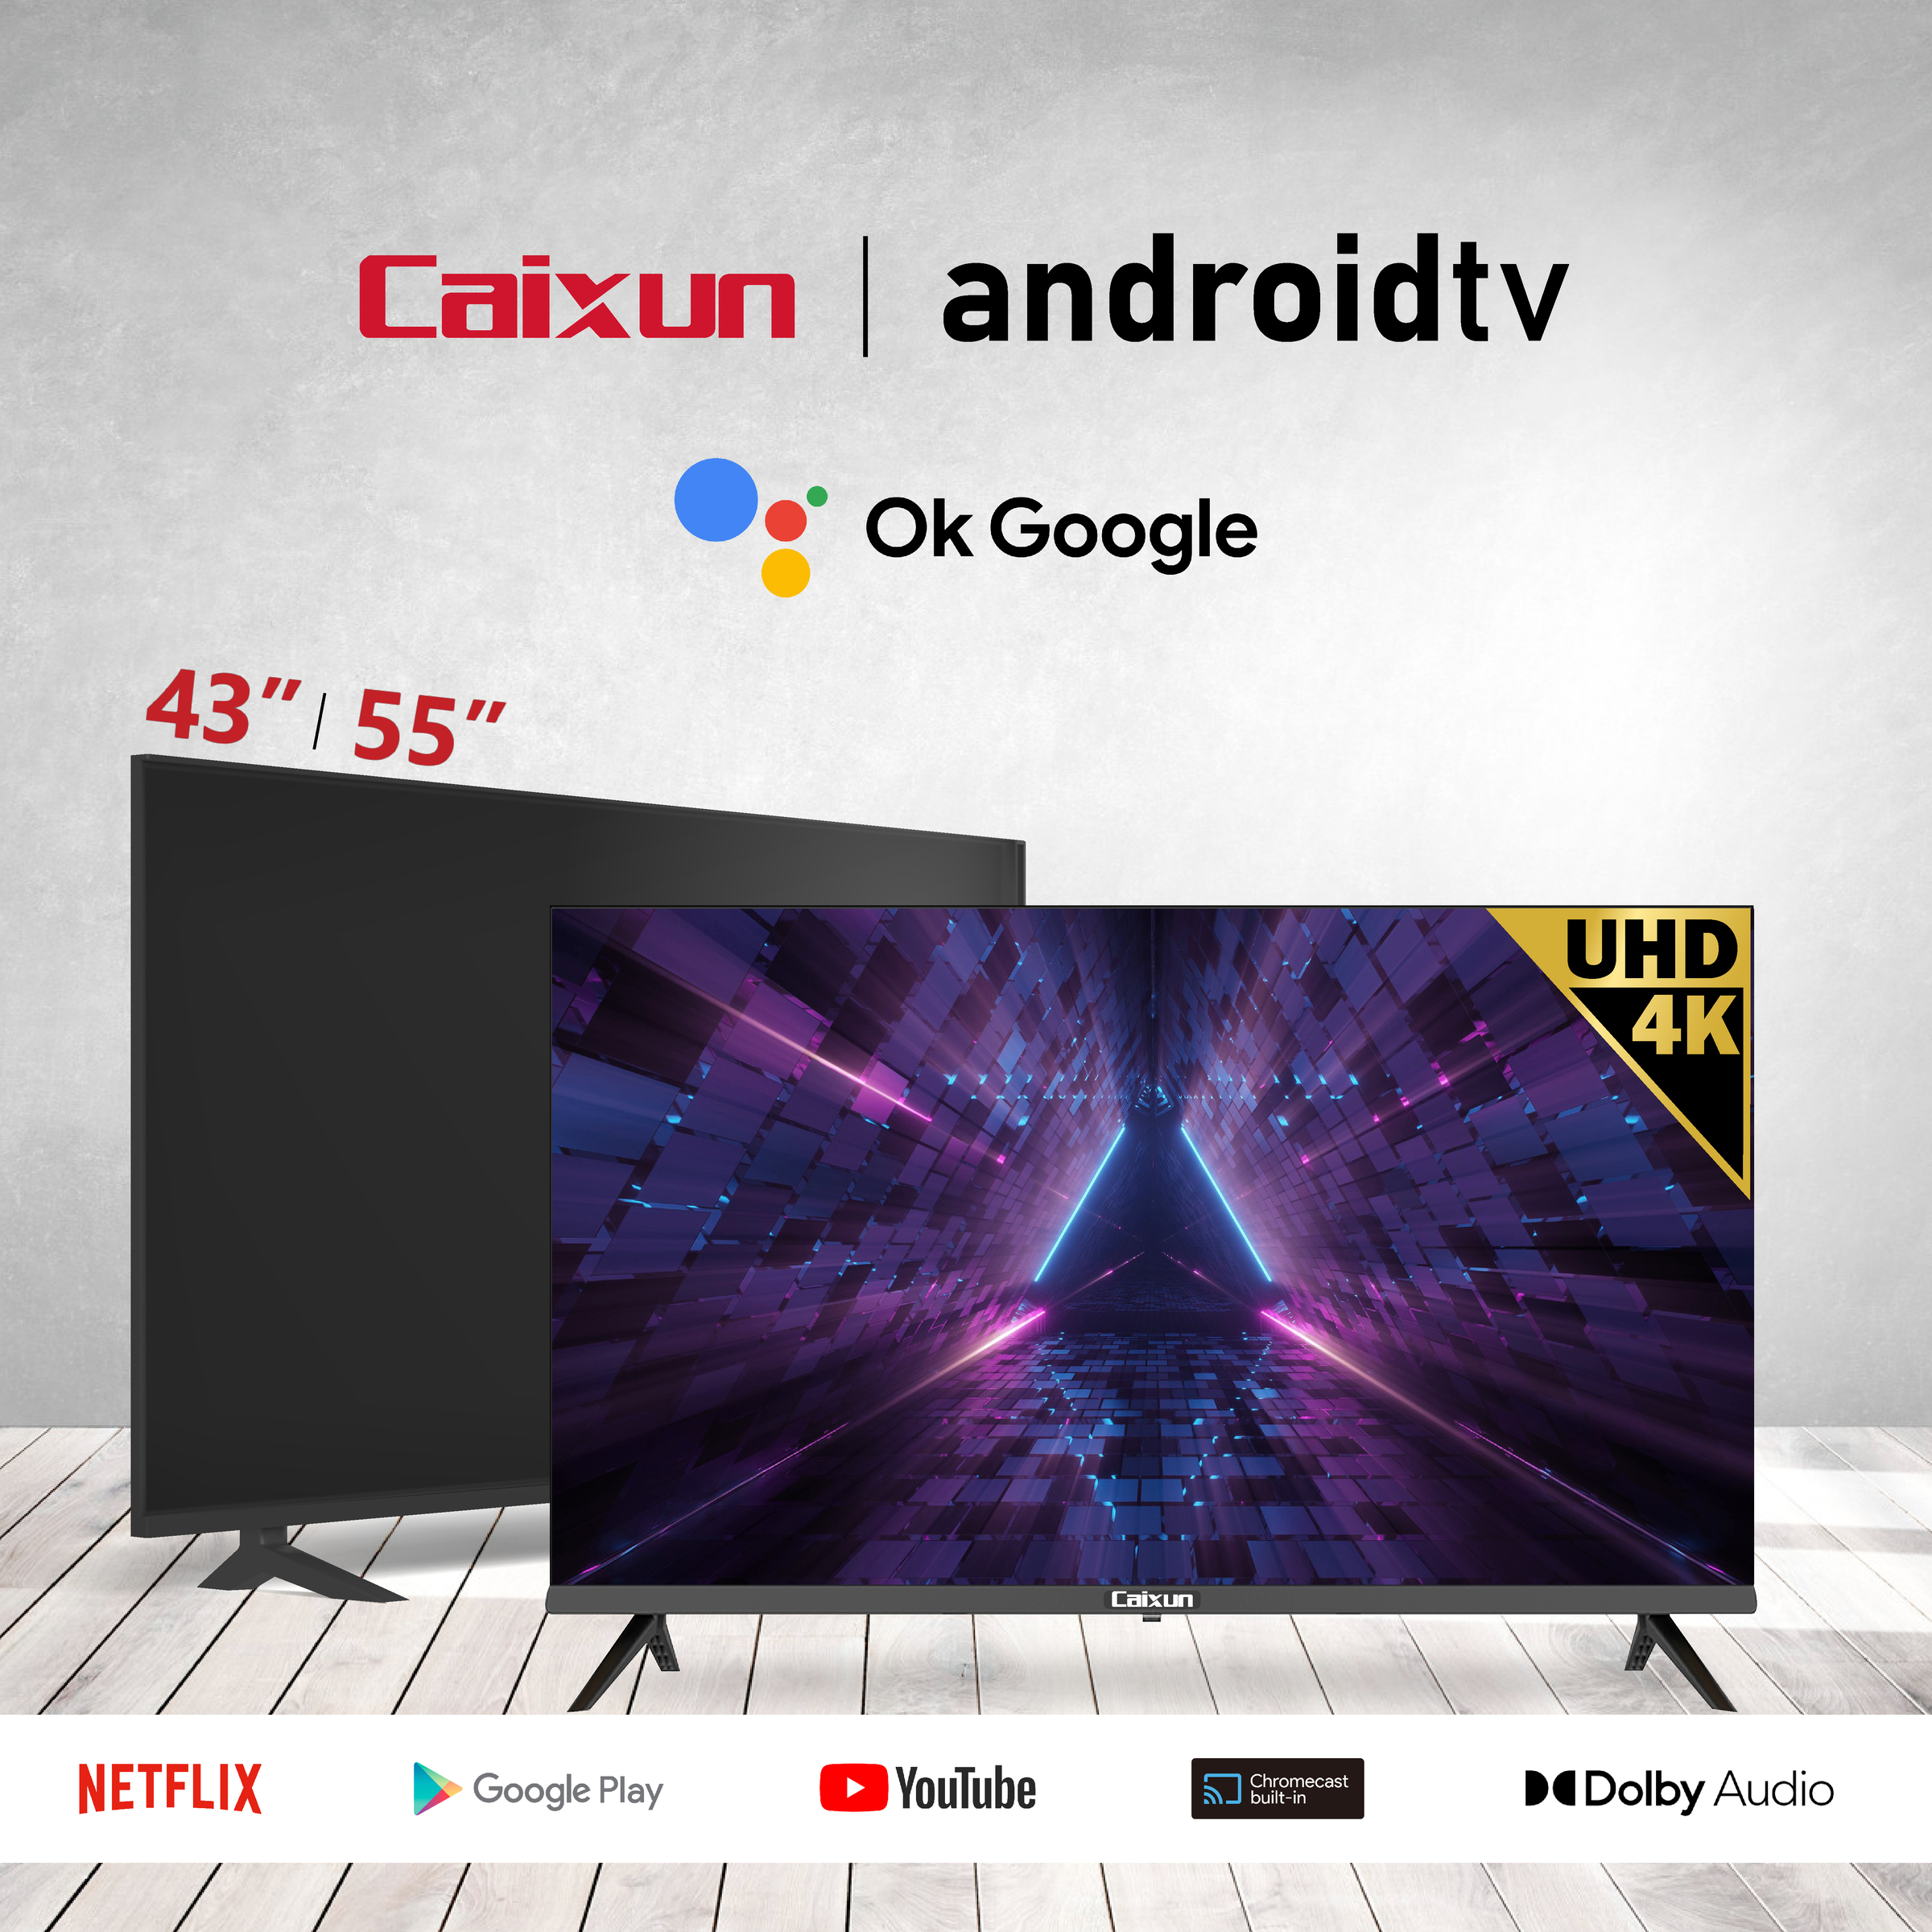 01-Caixun Android TV-01